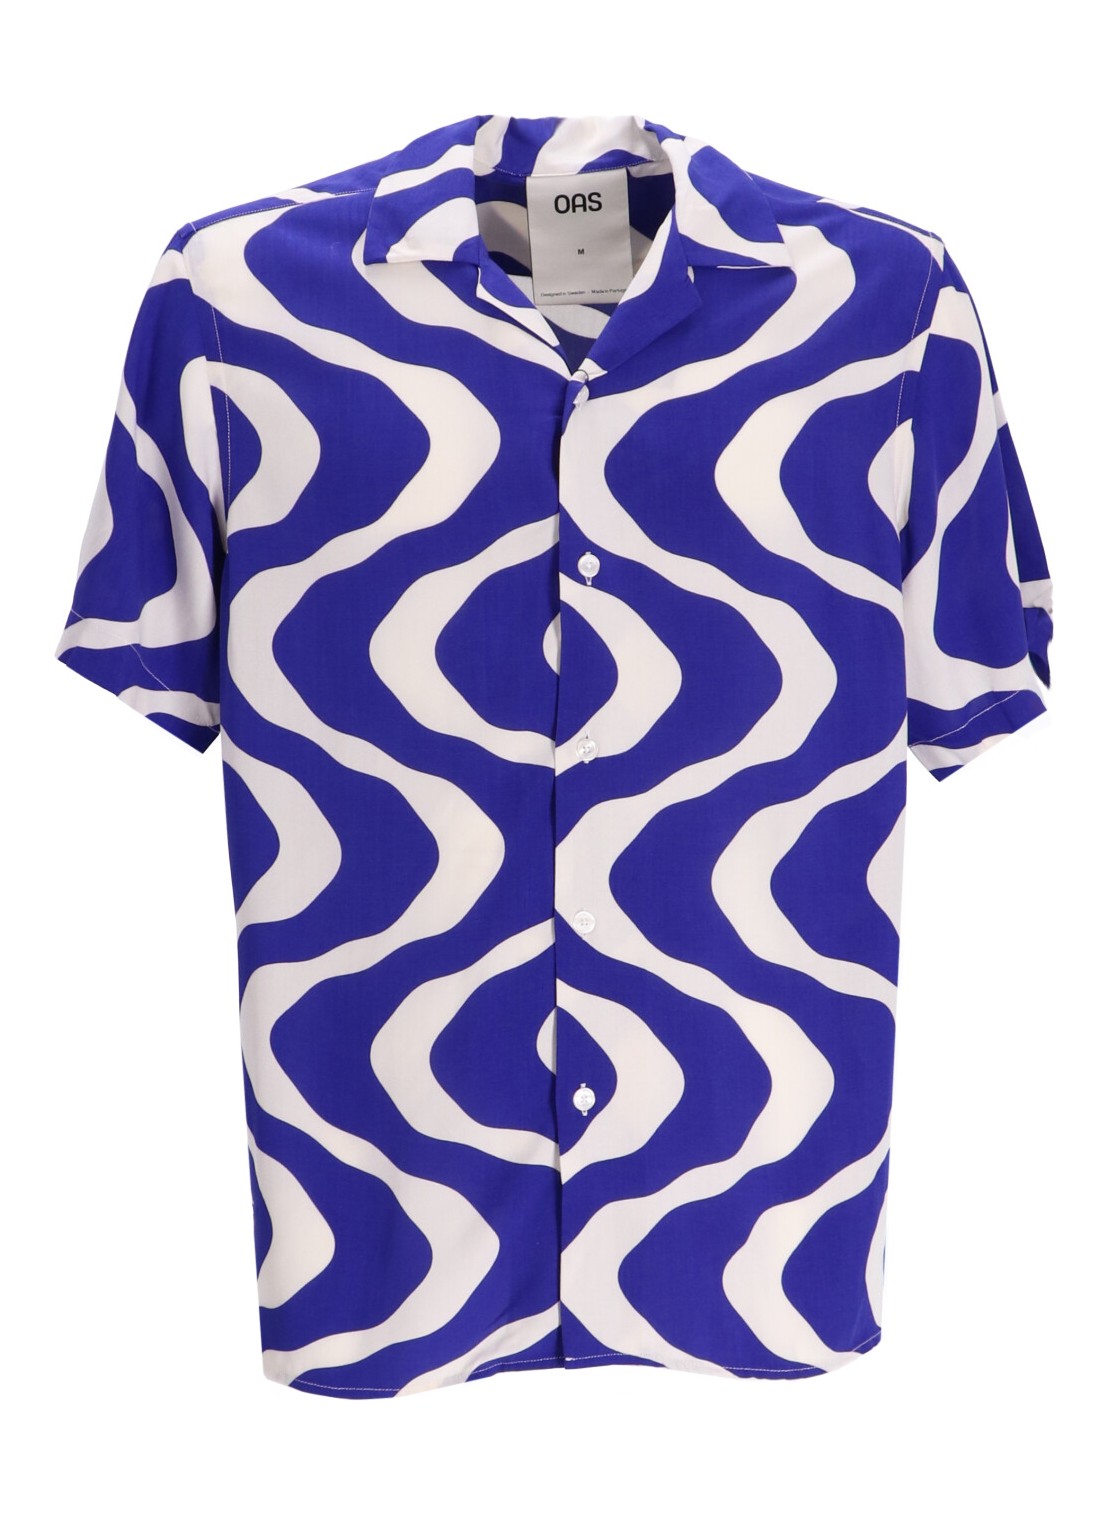 Camiseria oas shirt manblue rippling viscose shirt - 700550 blue talla S
 